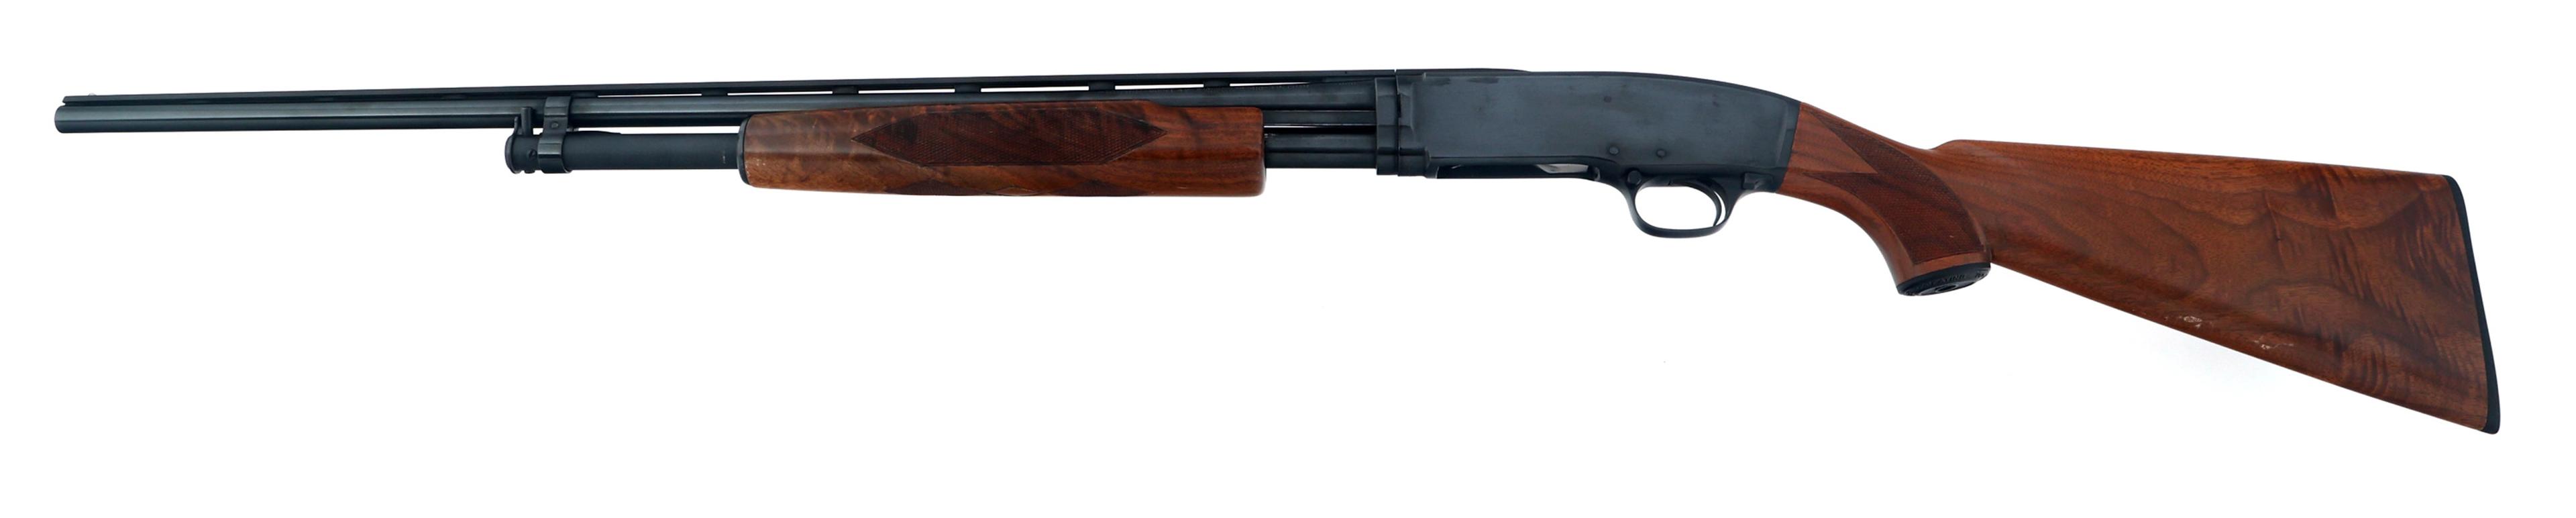 1941 WINCHESTER MODEL 42 .410 GAUGE SHOTGUN